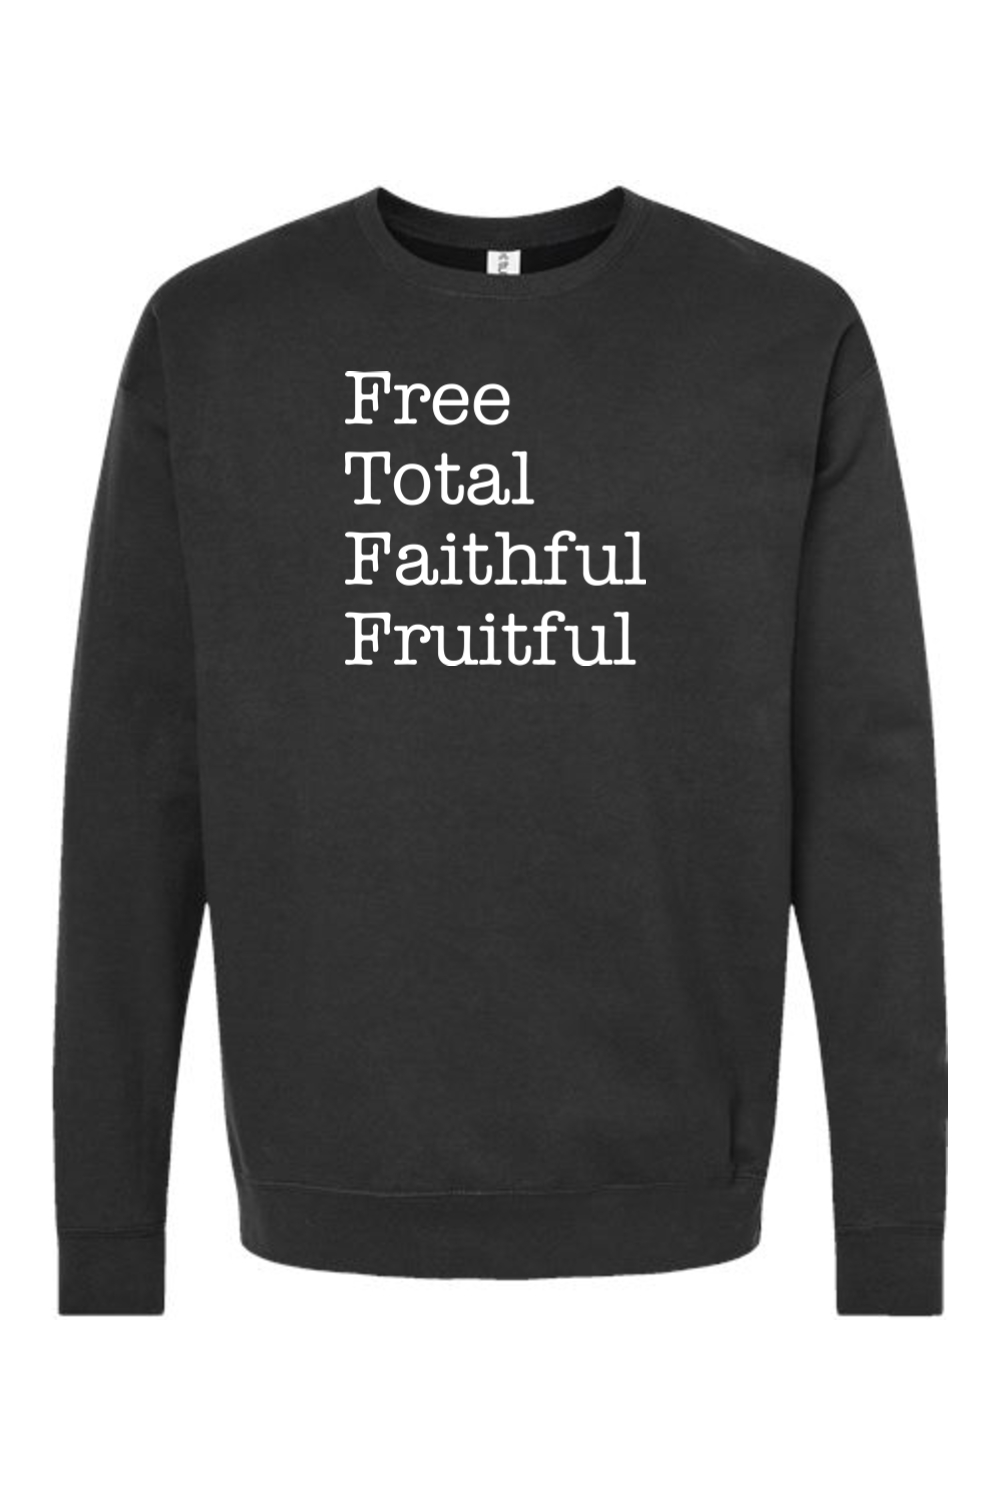 Free Total Faithful Fruitful - Theology of the Body Crewneck Sweatshirt